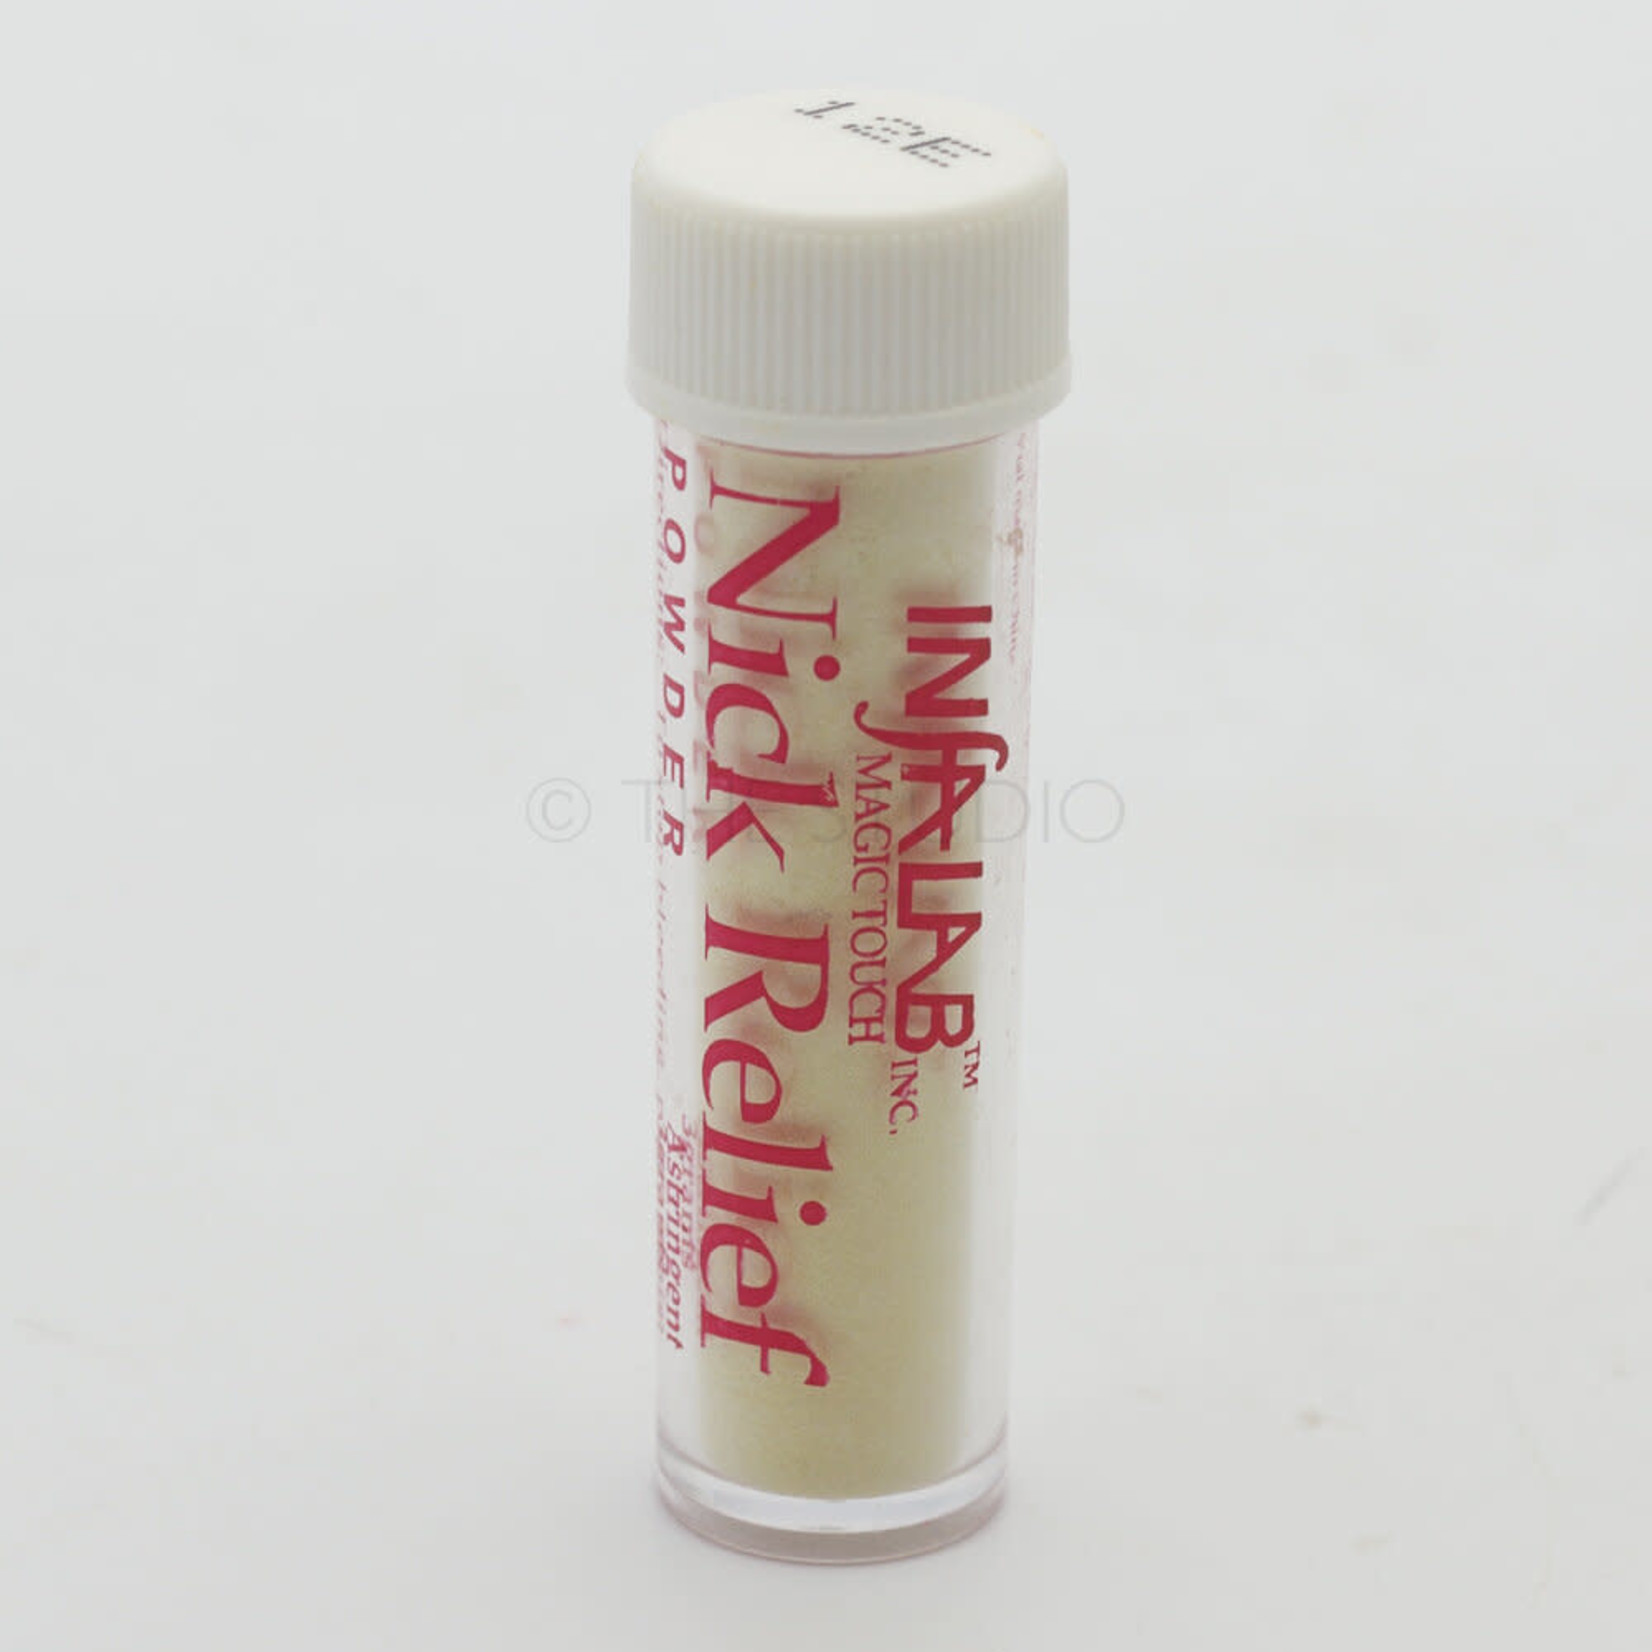 Infa-Lab Infa-Lab - Nick Relief Powder - 1 ct